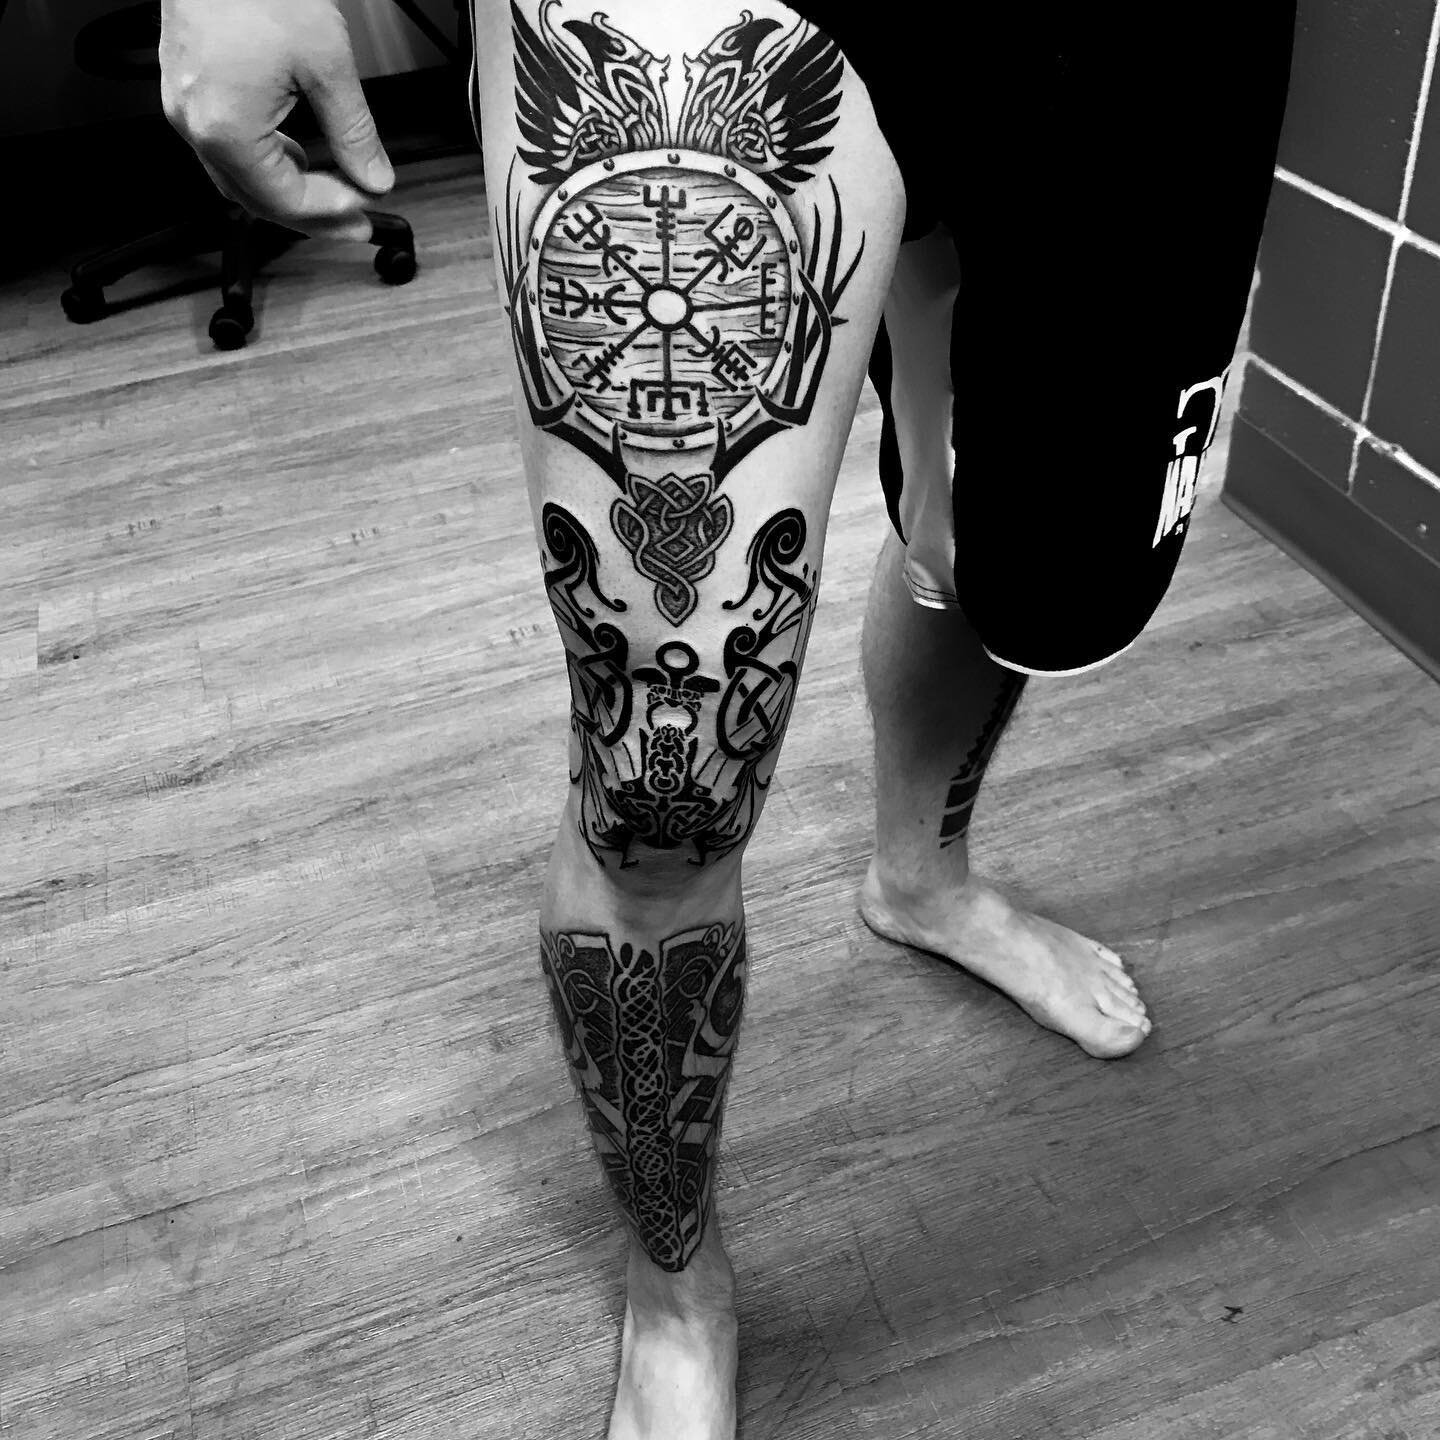 Tat2X Ink Armor Premium Full Leg Tattoo Cover Up Sleeve  No Slip Gripper   US Made  Suntan  XSS single leg tattoo cover up sleeve  Amazonca  Beauty  Personal Care